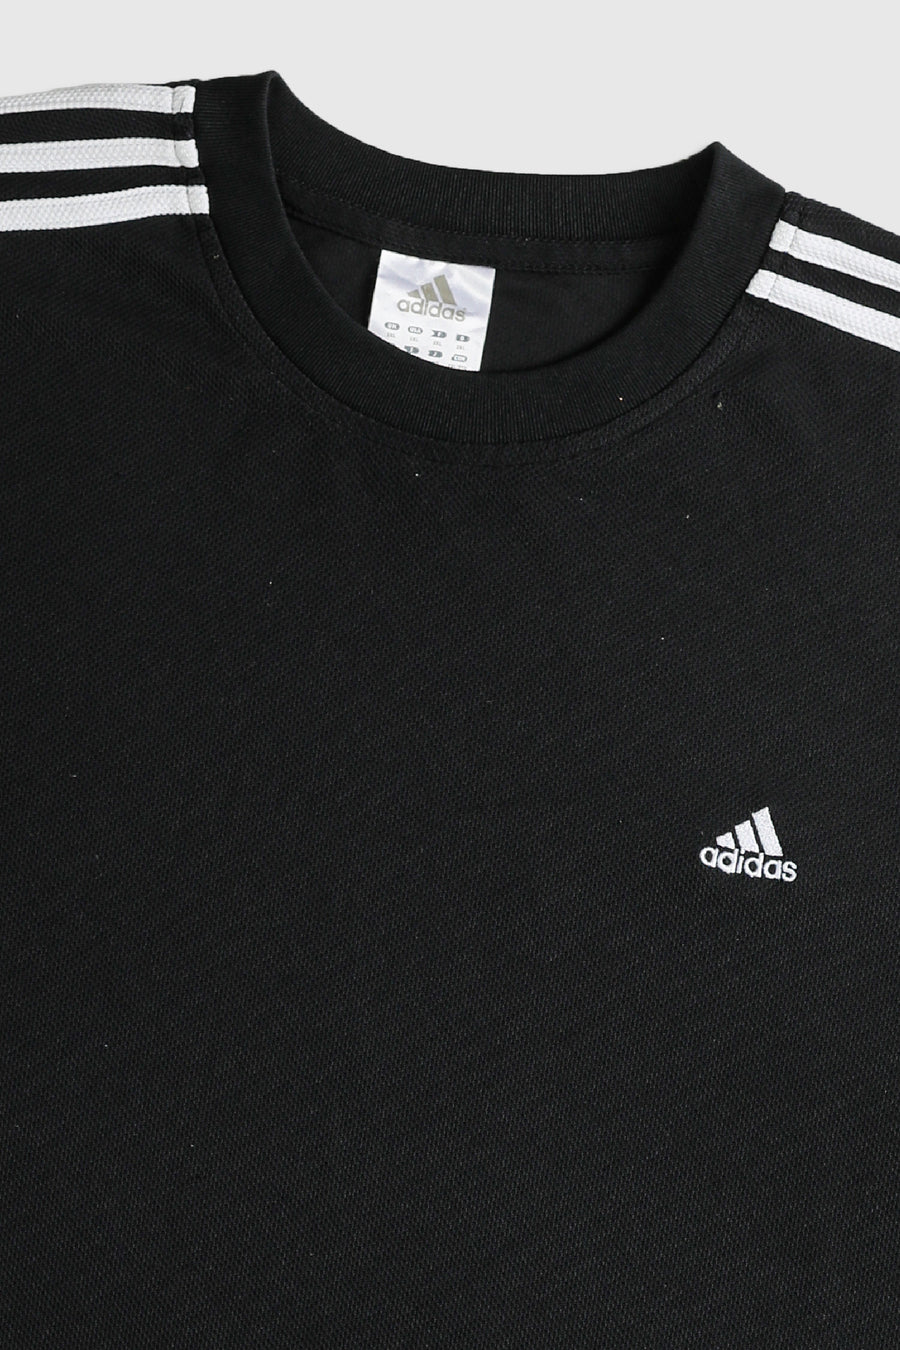 Vintage Adidas Jersey - 2XL